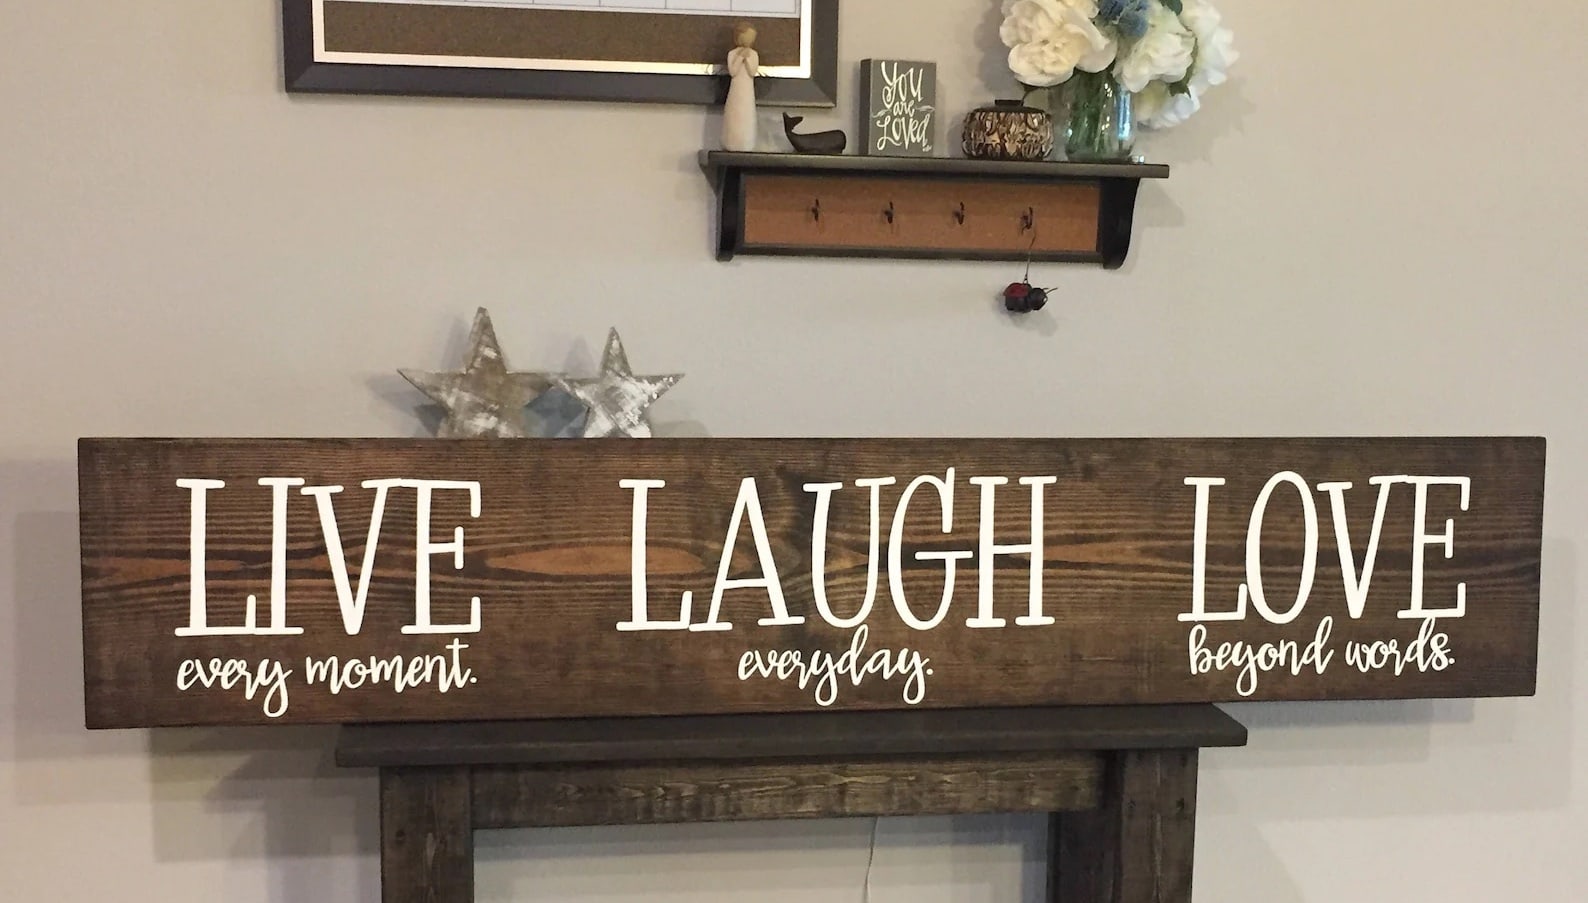 Live Laugh Love sign